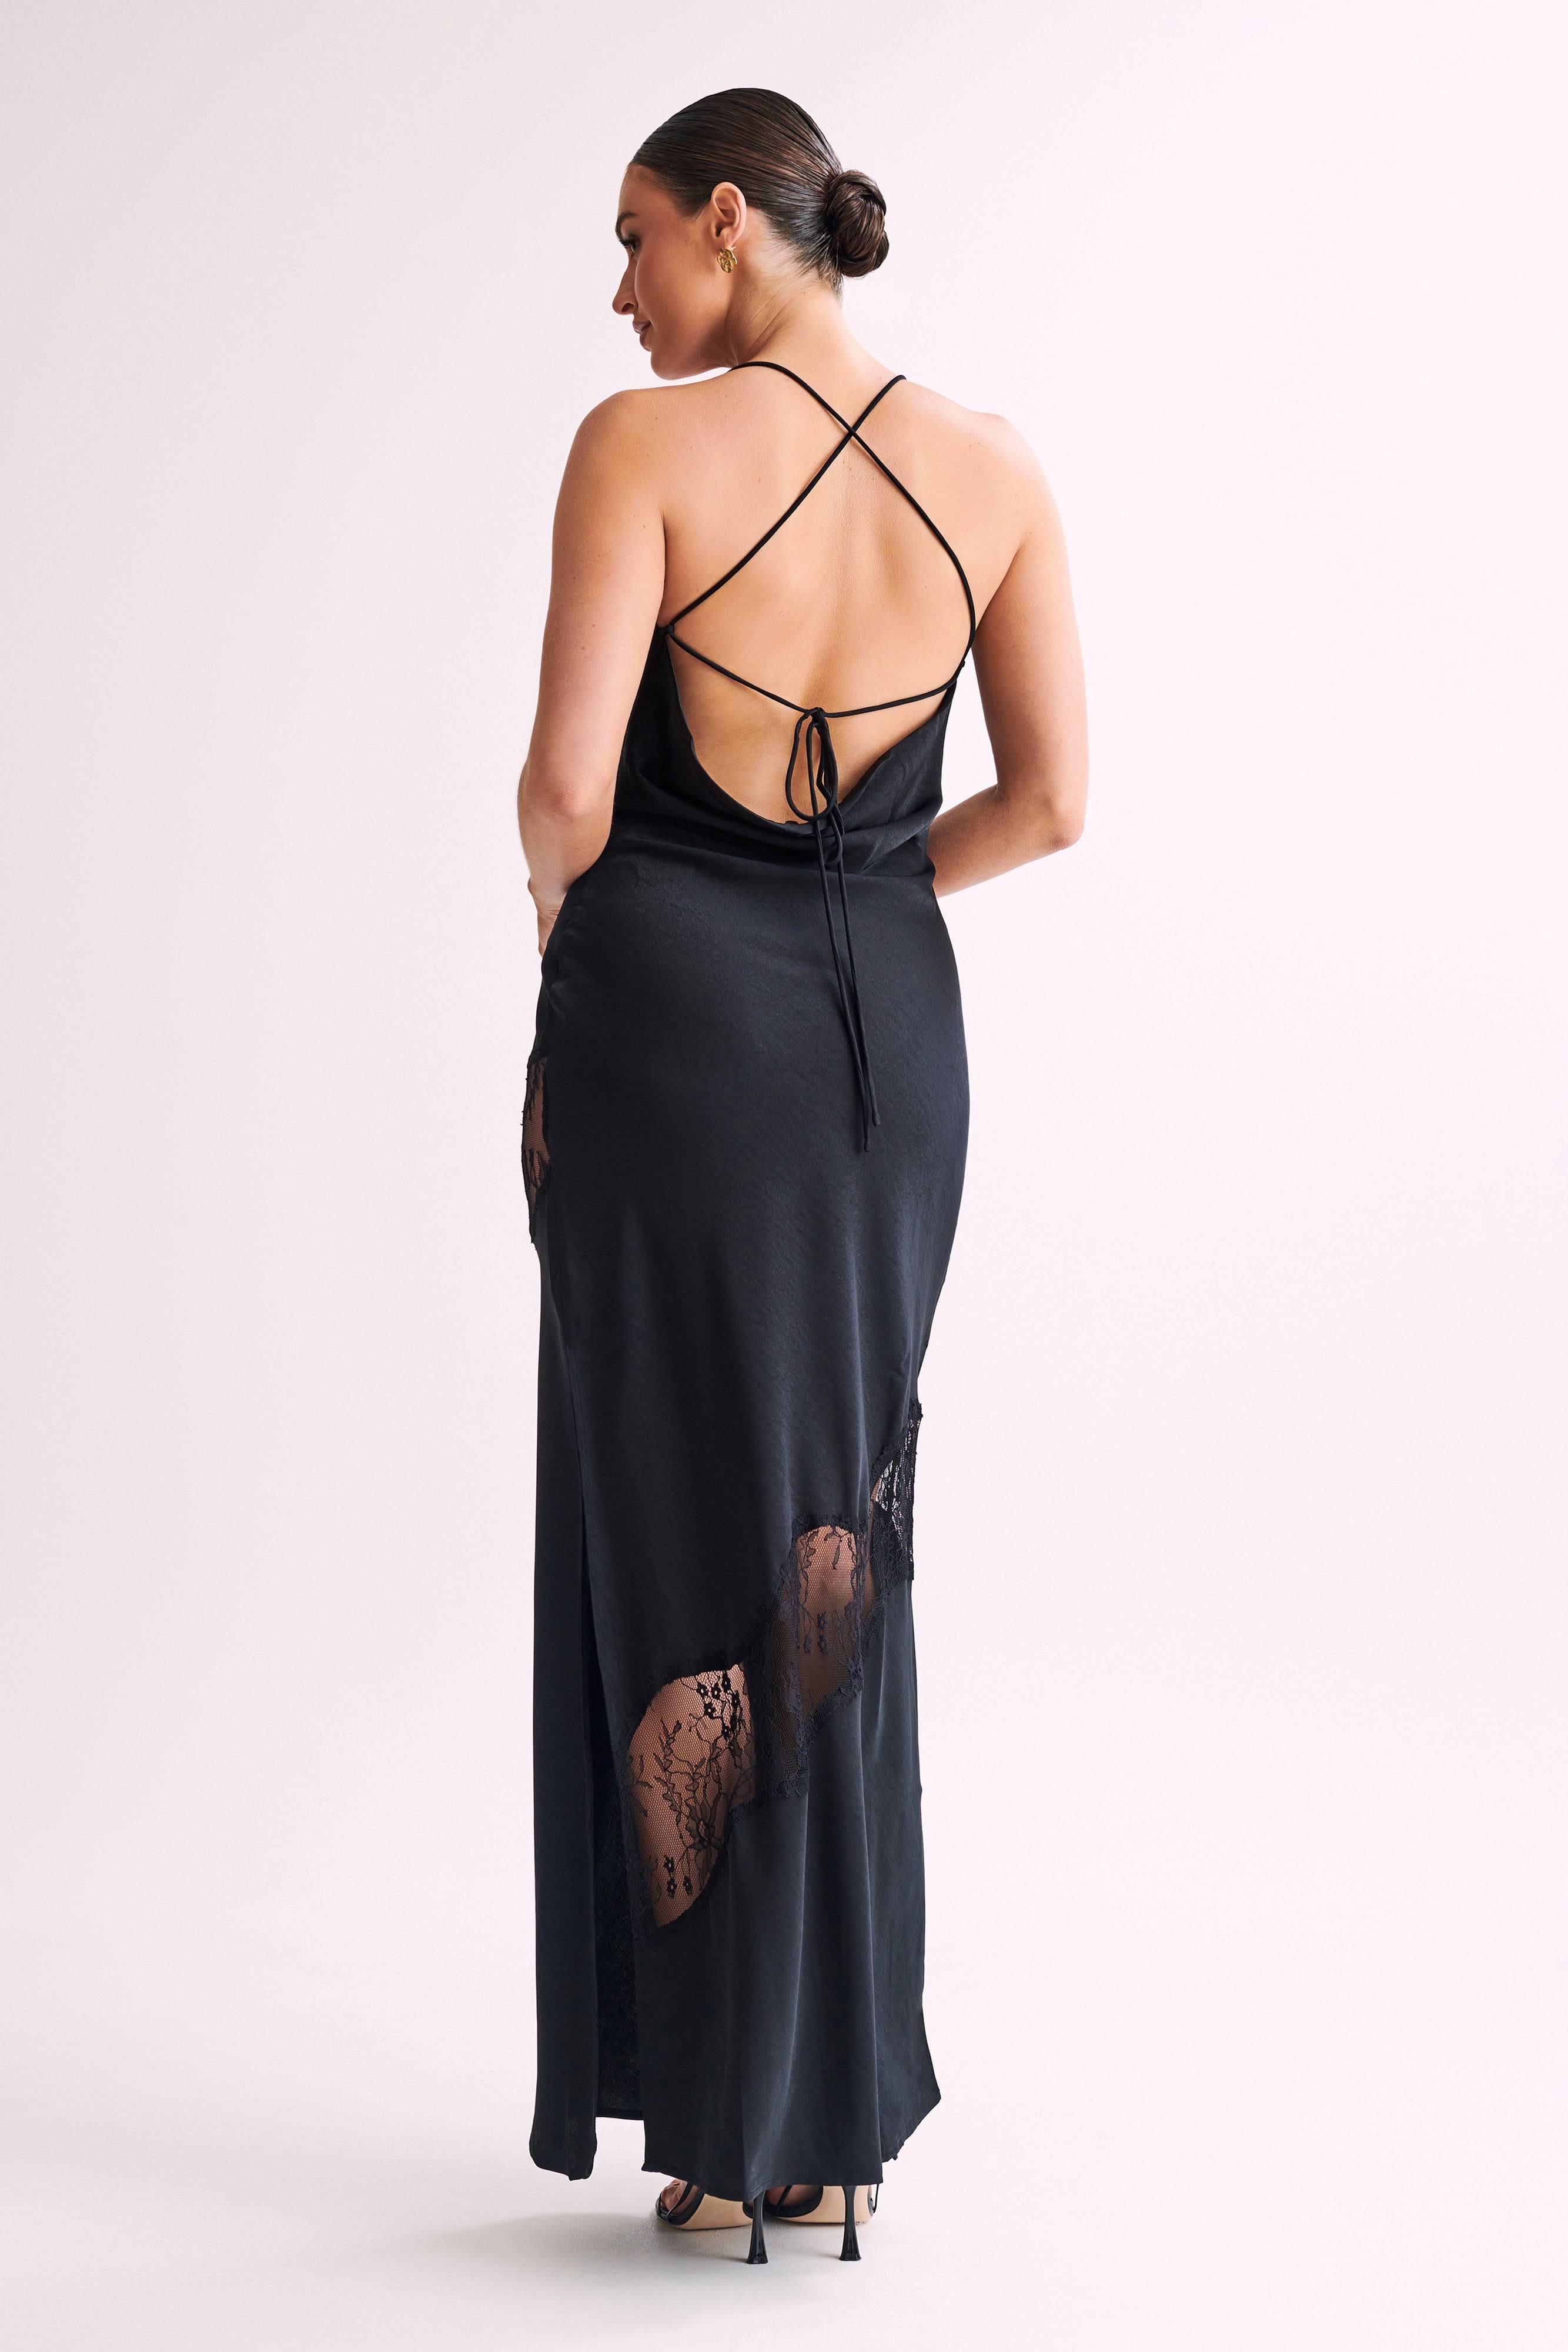 Chandra Lace Satin Maxi Dress Black: Elegant, Long, and Romantic Outfit | Image